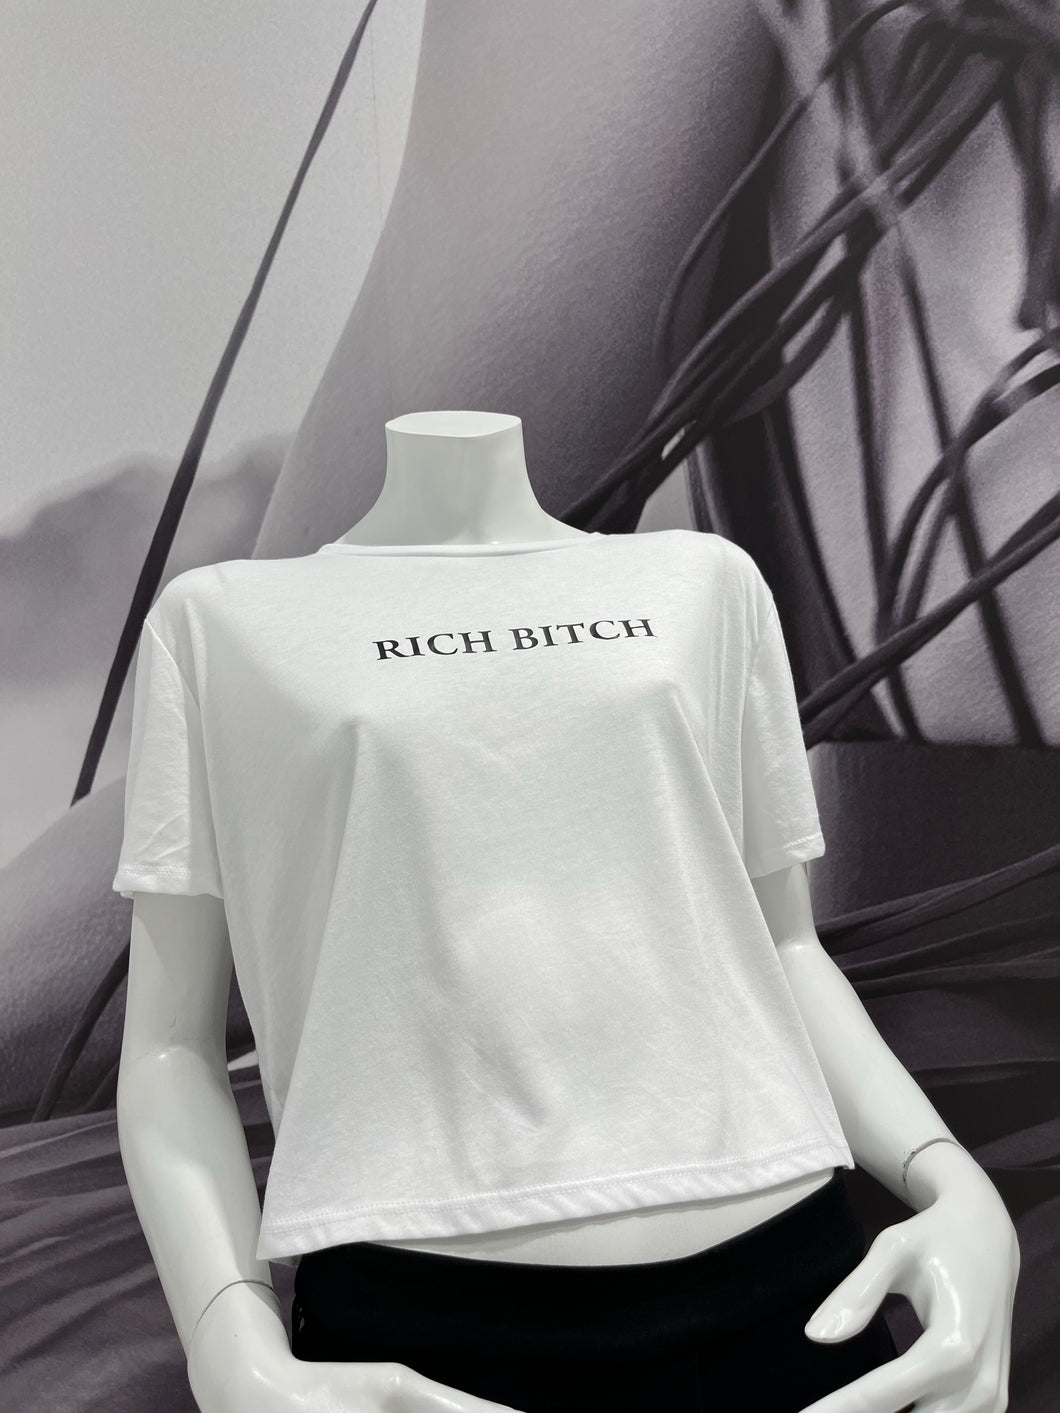 Rich Bitch T-Shirts